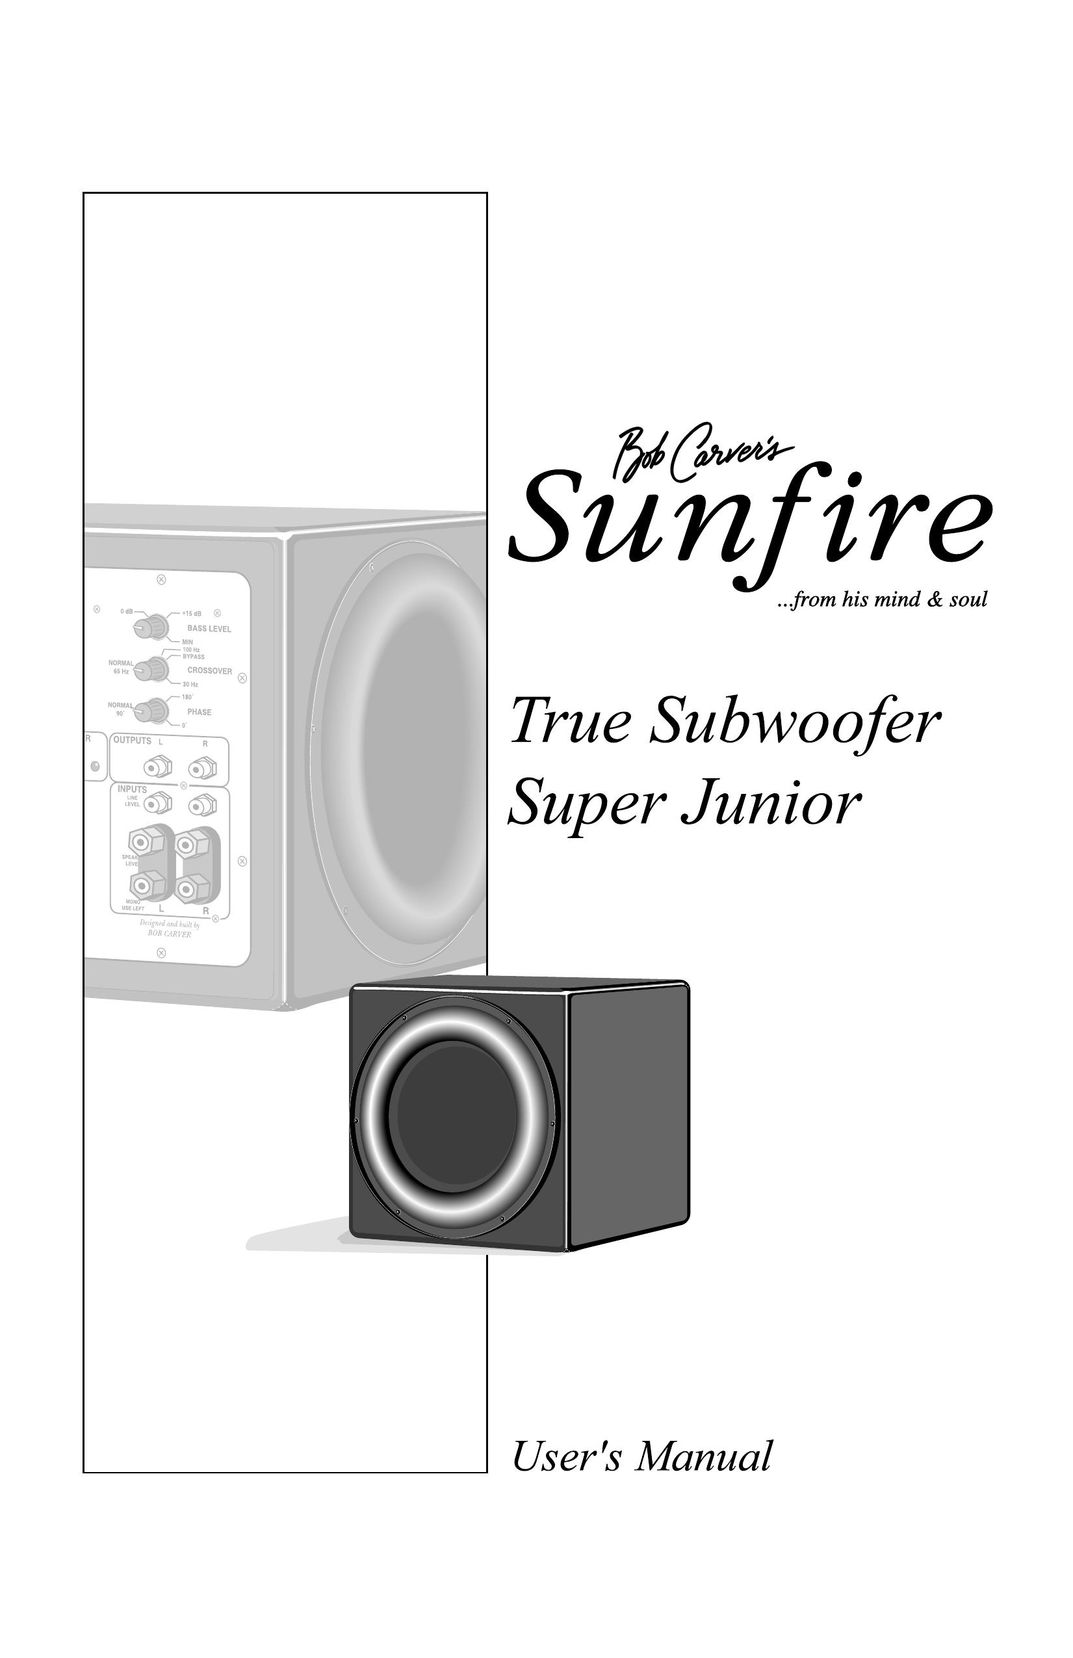 Sunfire True Subwoofer Super Junior Car Stereo System User Manual